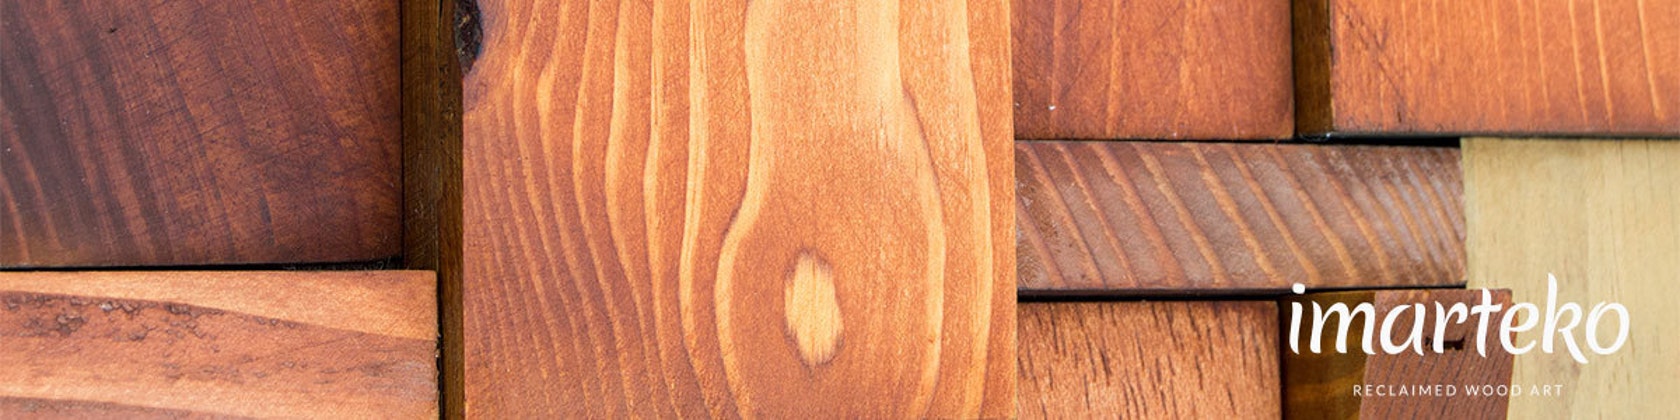 Cuadro de troncos de madera. Osadía - Imarteko